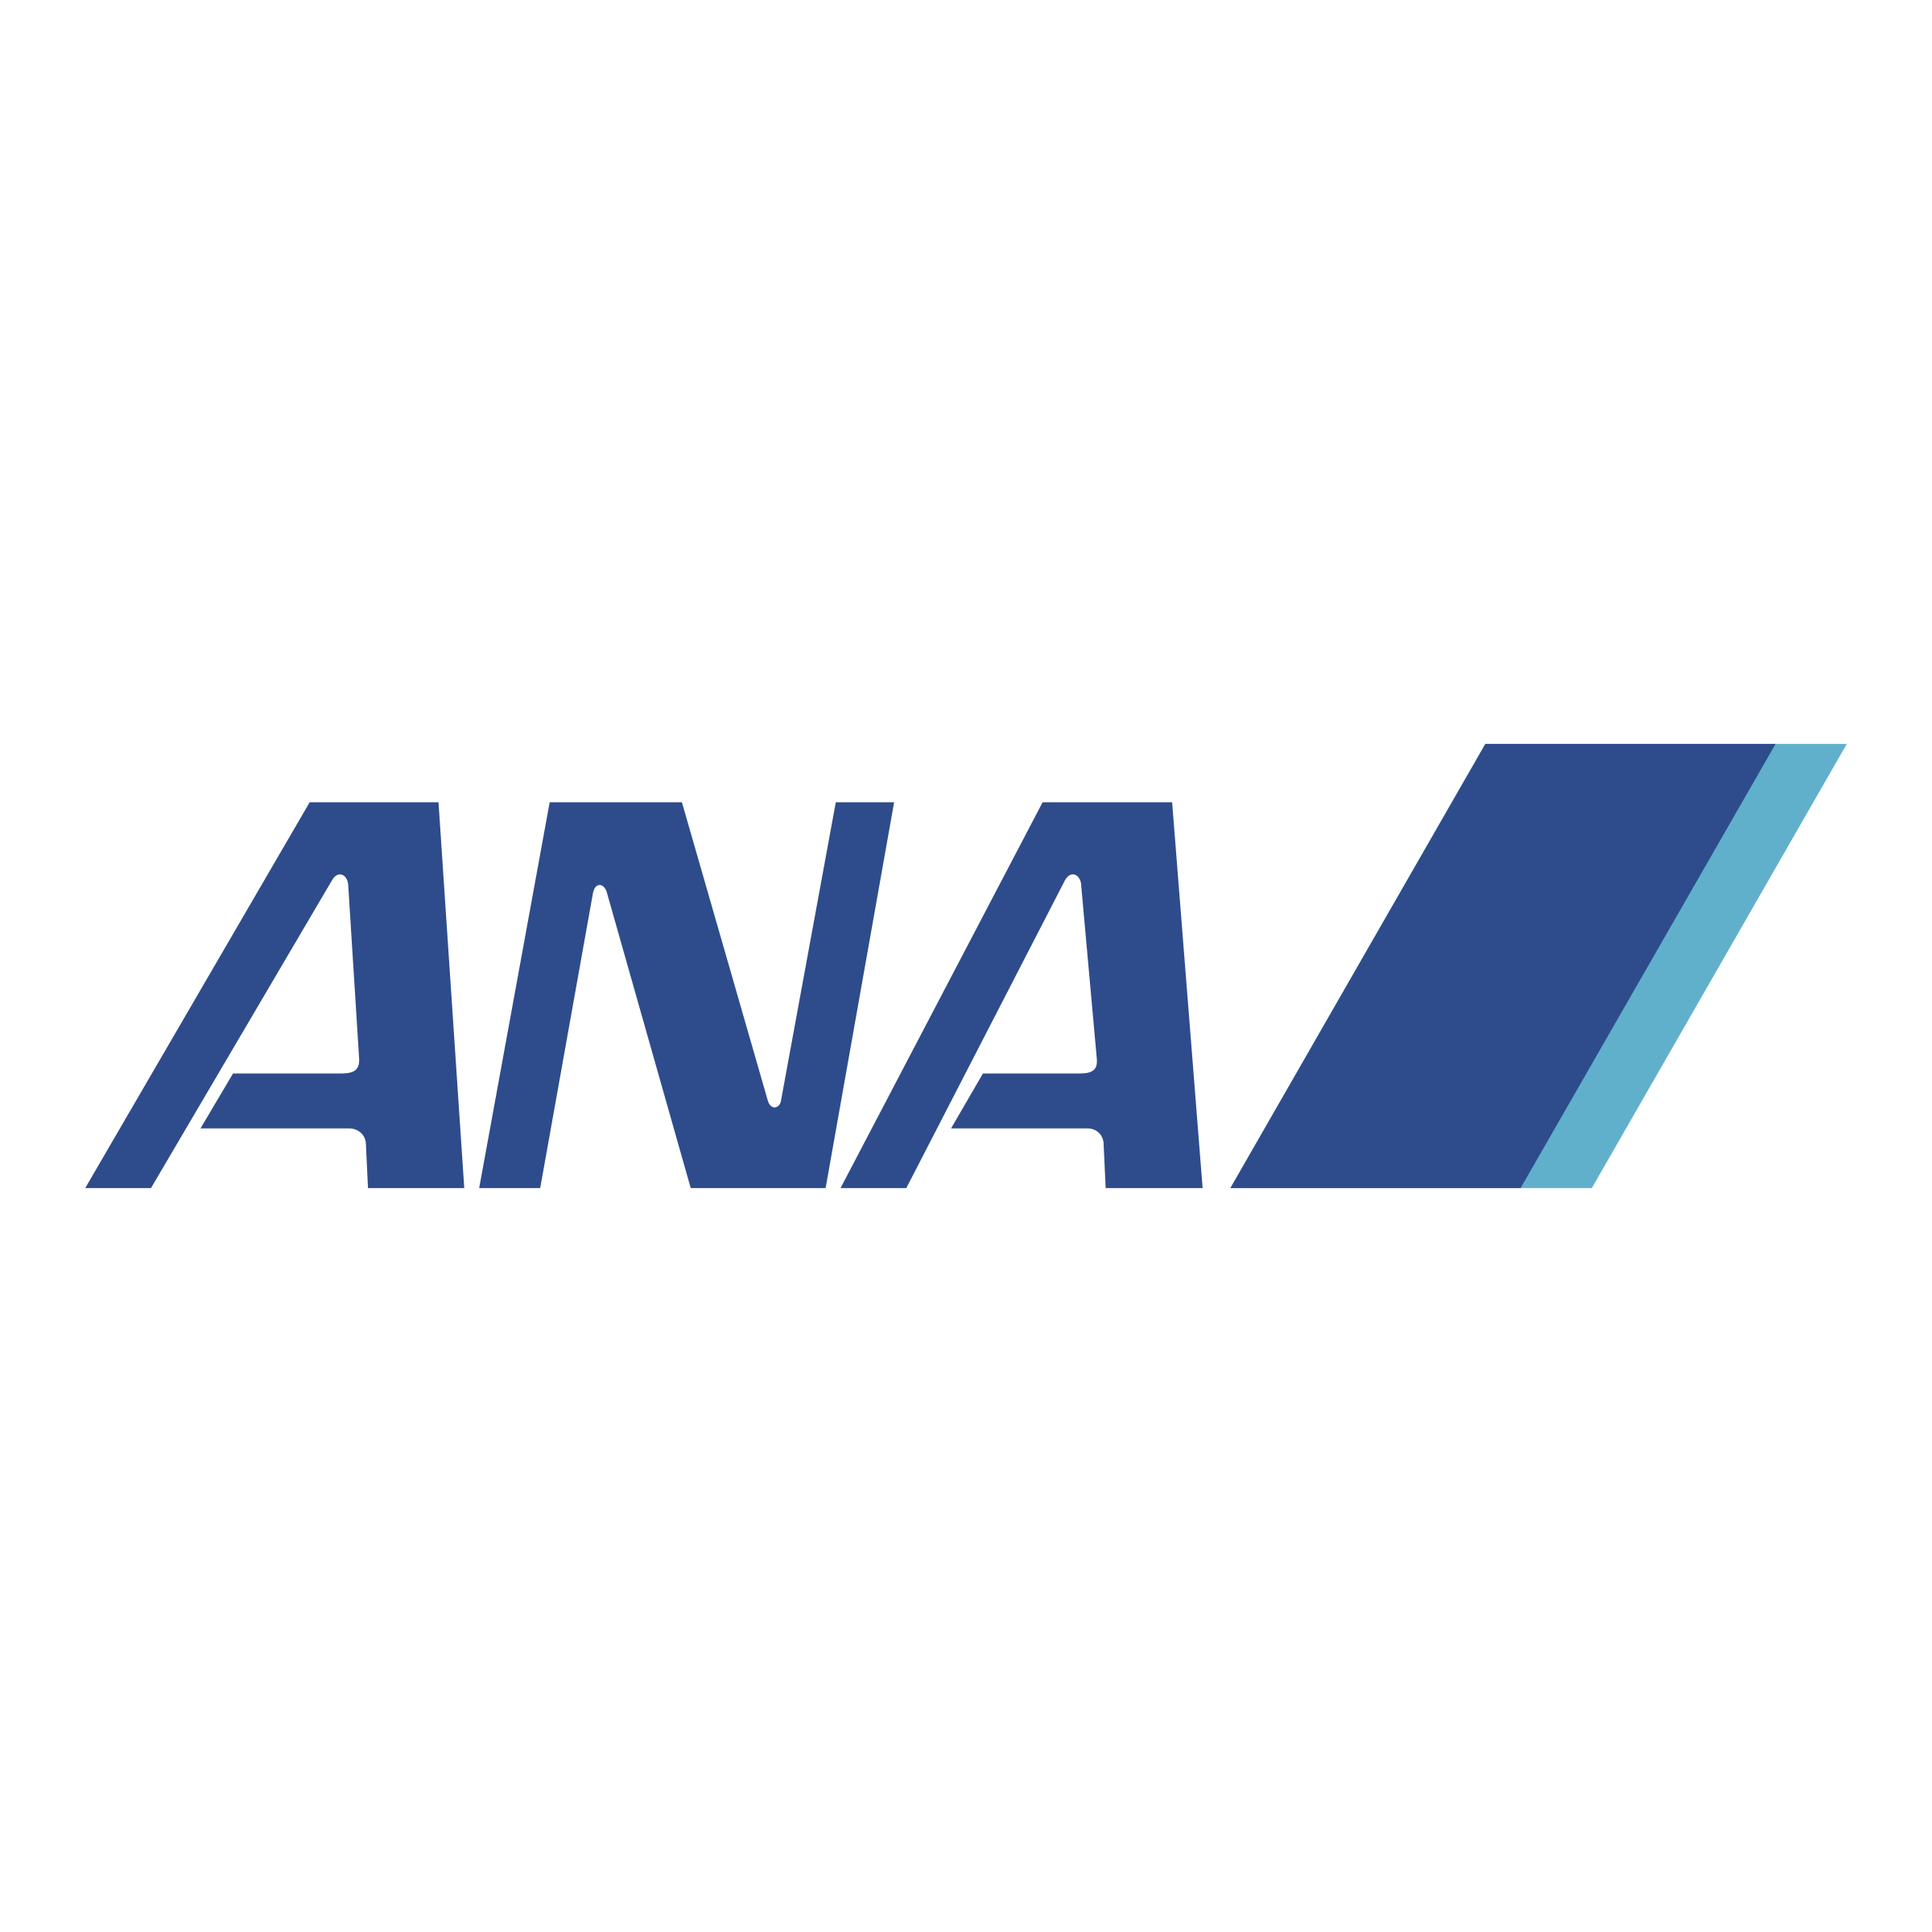 ana-logo